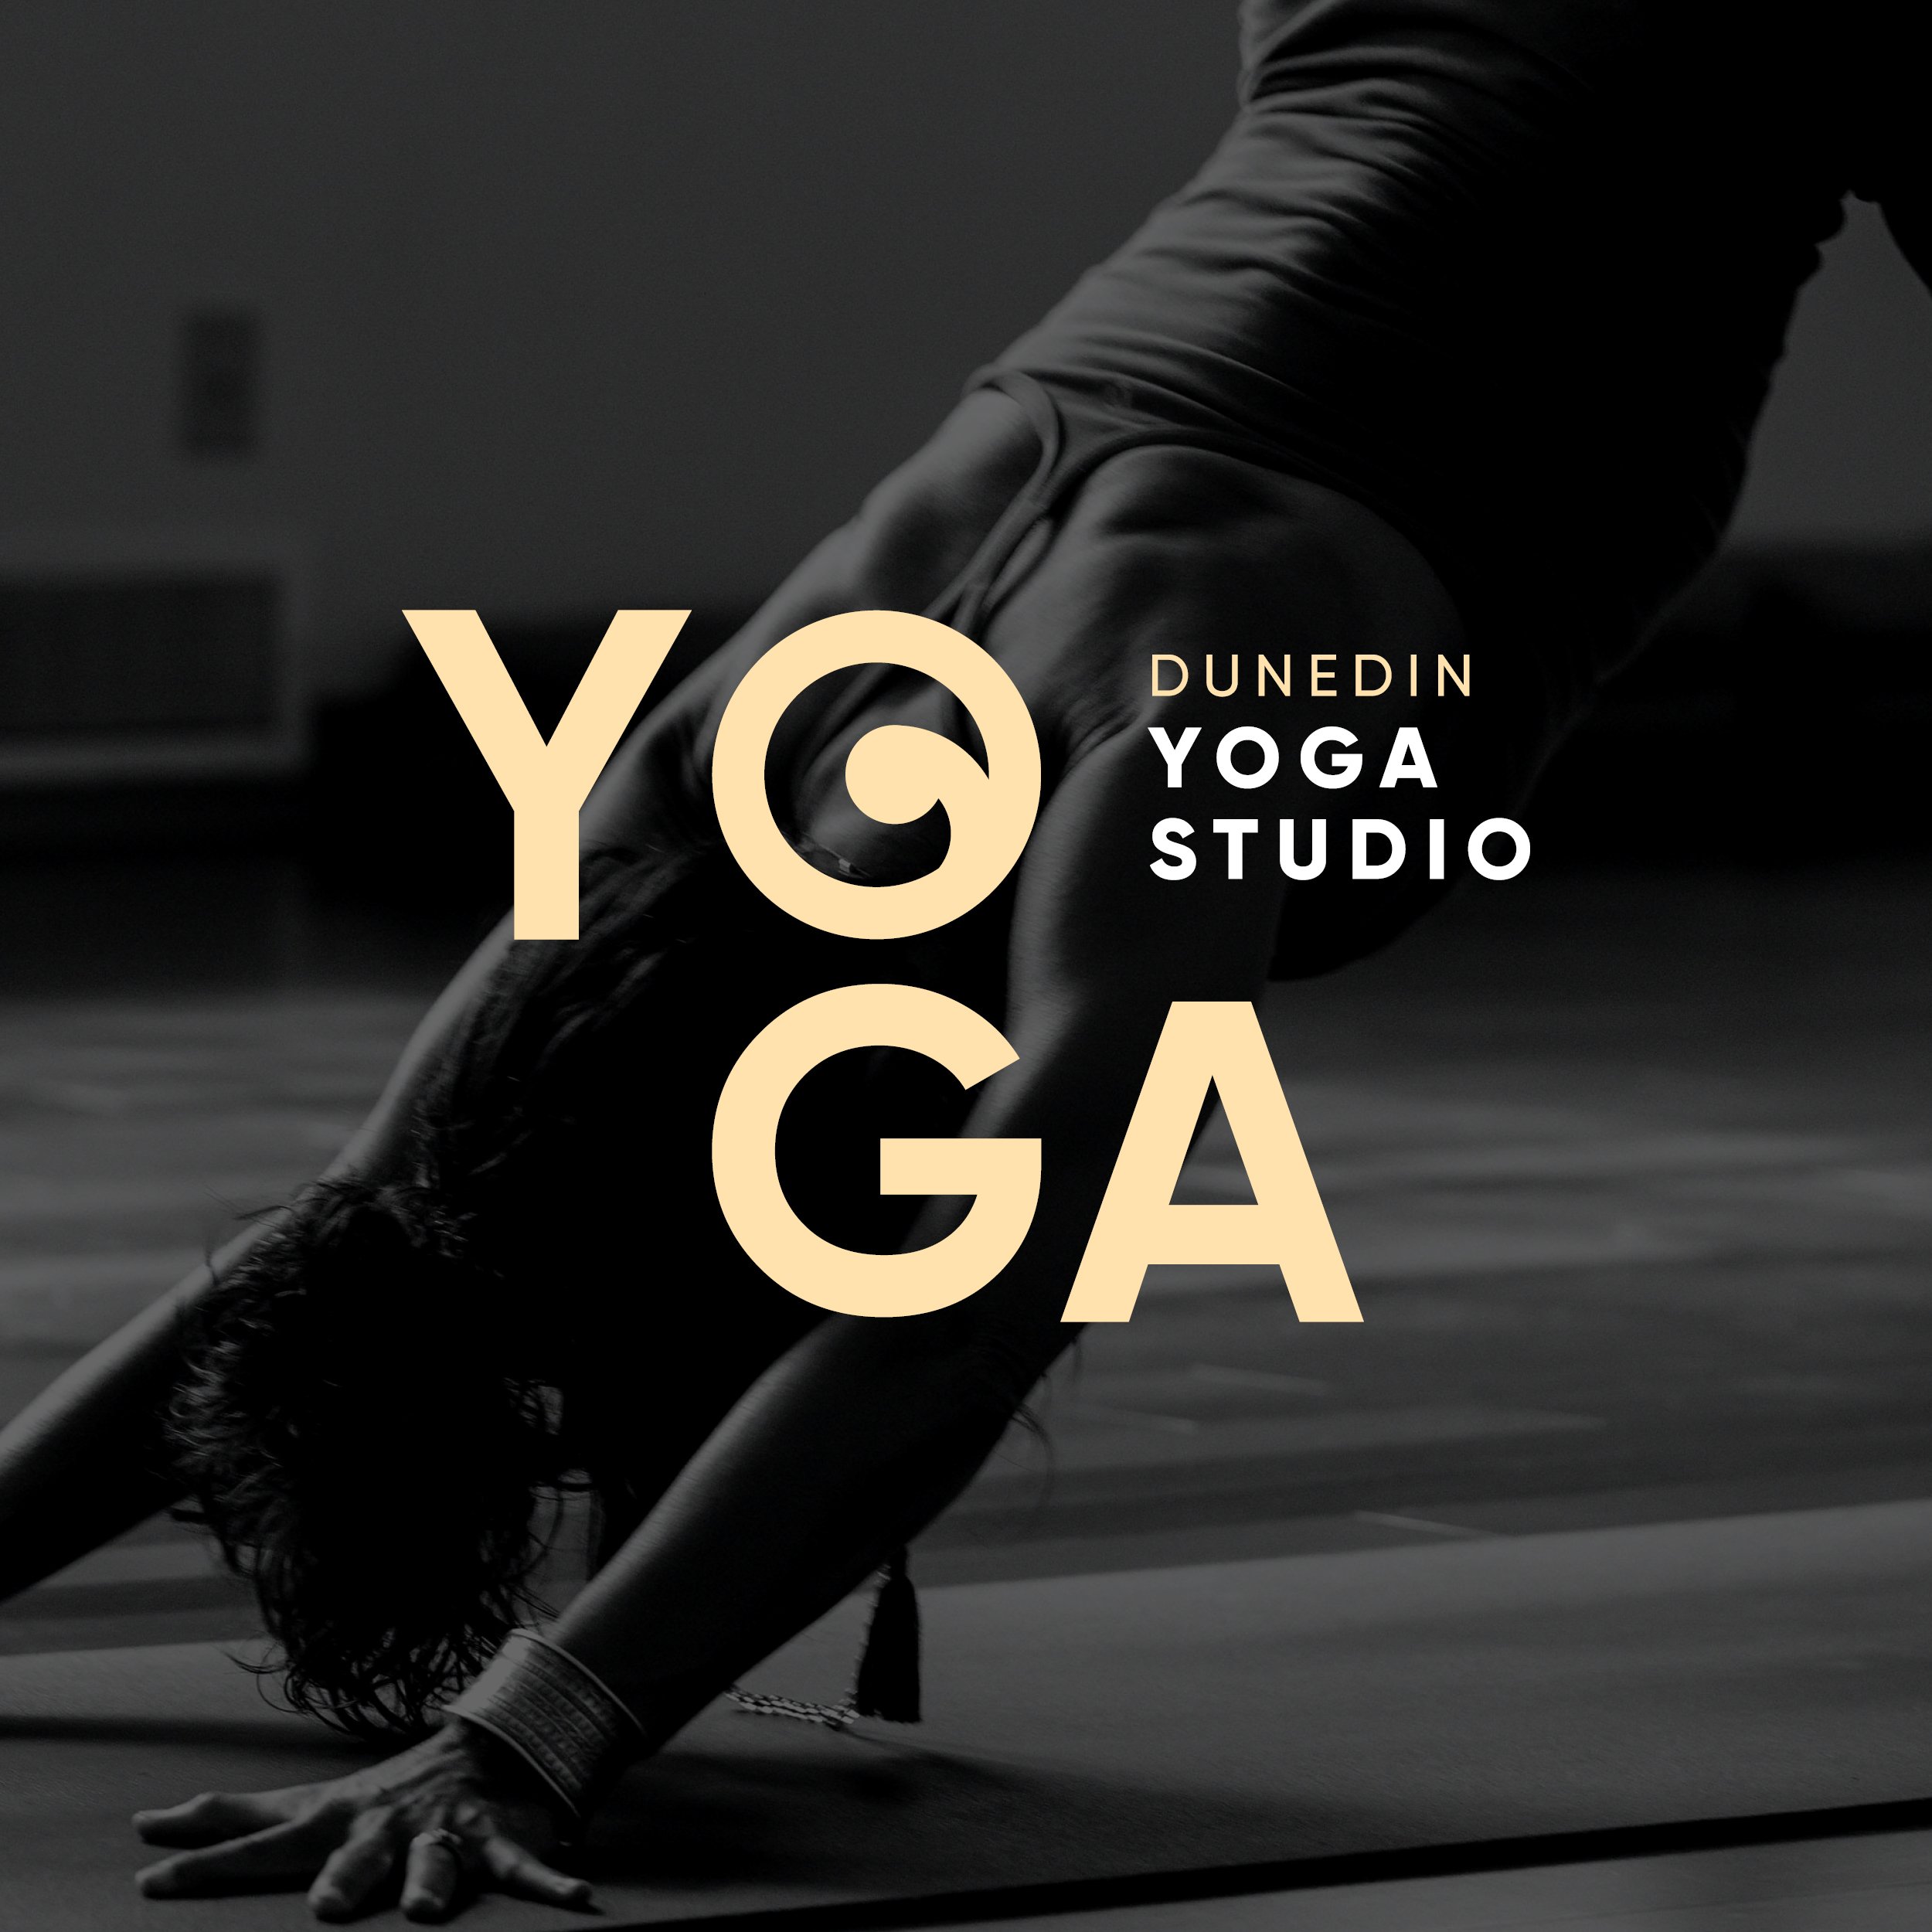 Dunedin Yoga Studio - Social (brand presentation).jpg